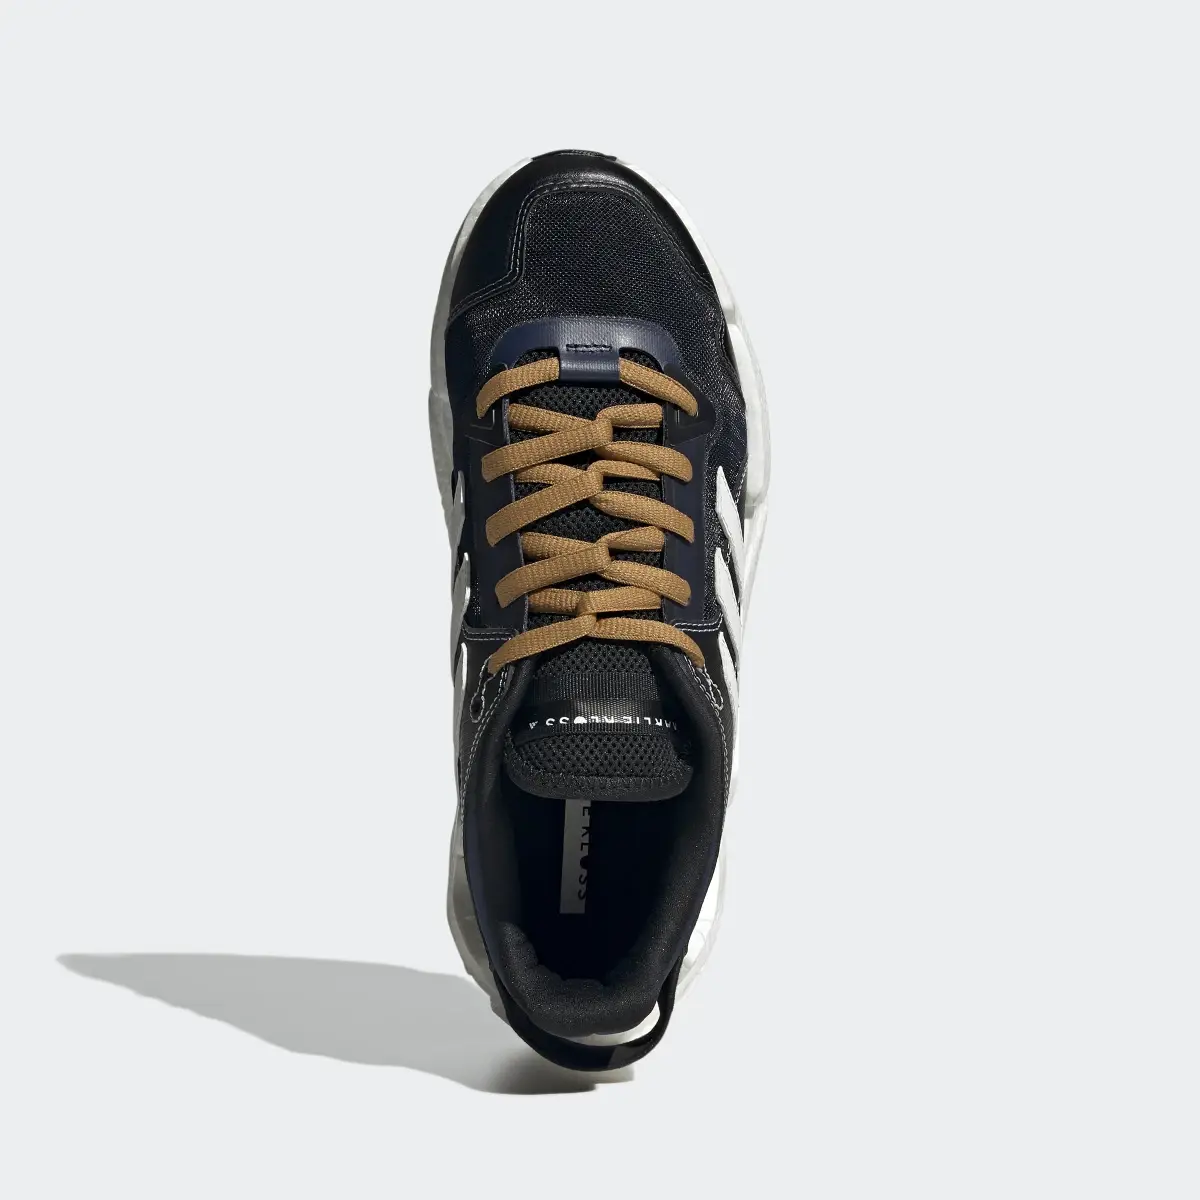 Adidas Scarpe Karlie Kloss X9000. 3